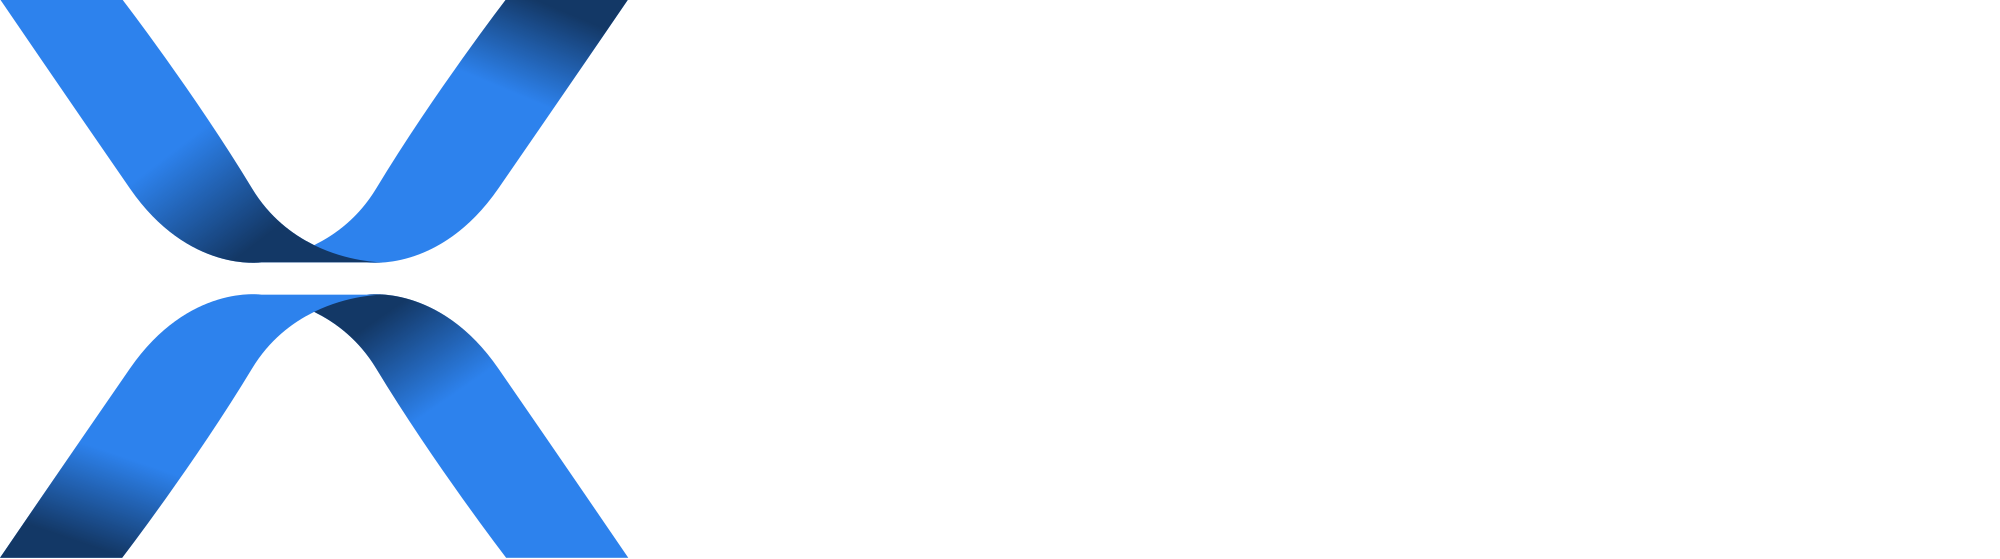 XCodeo Technologies